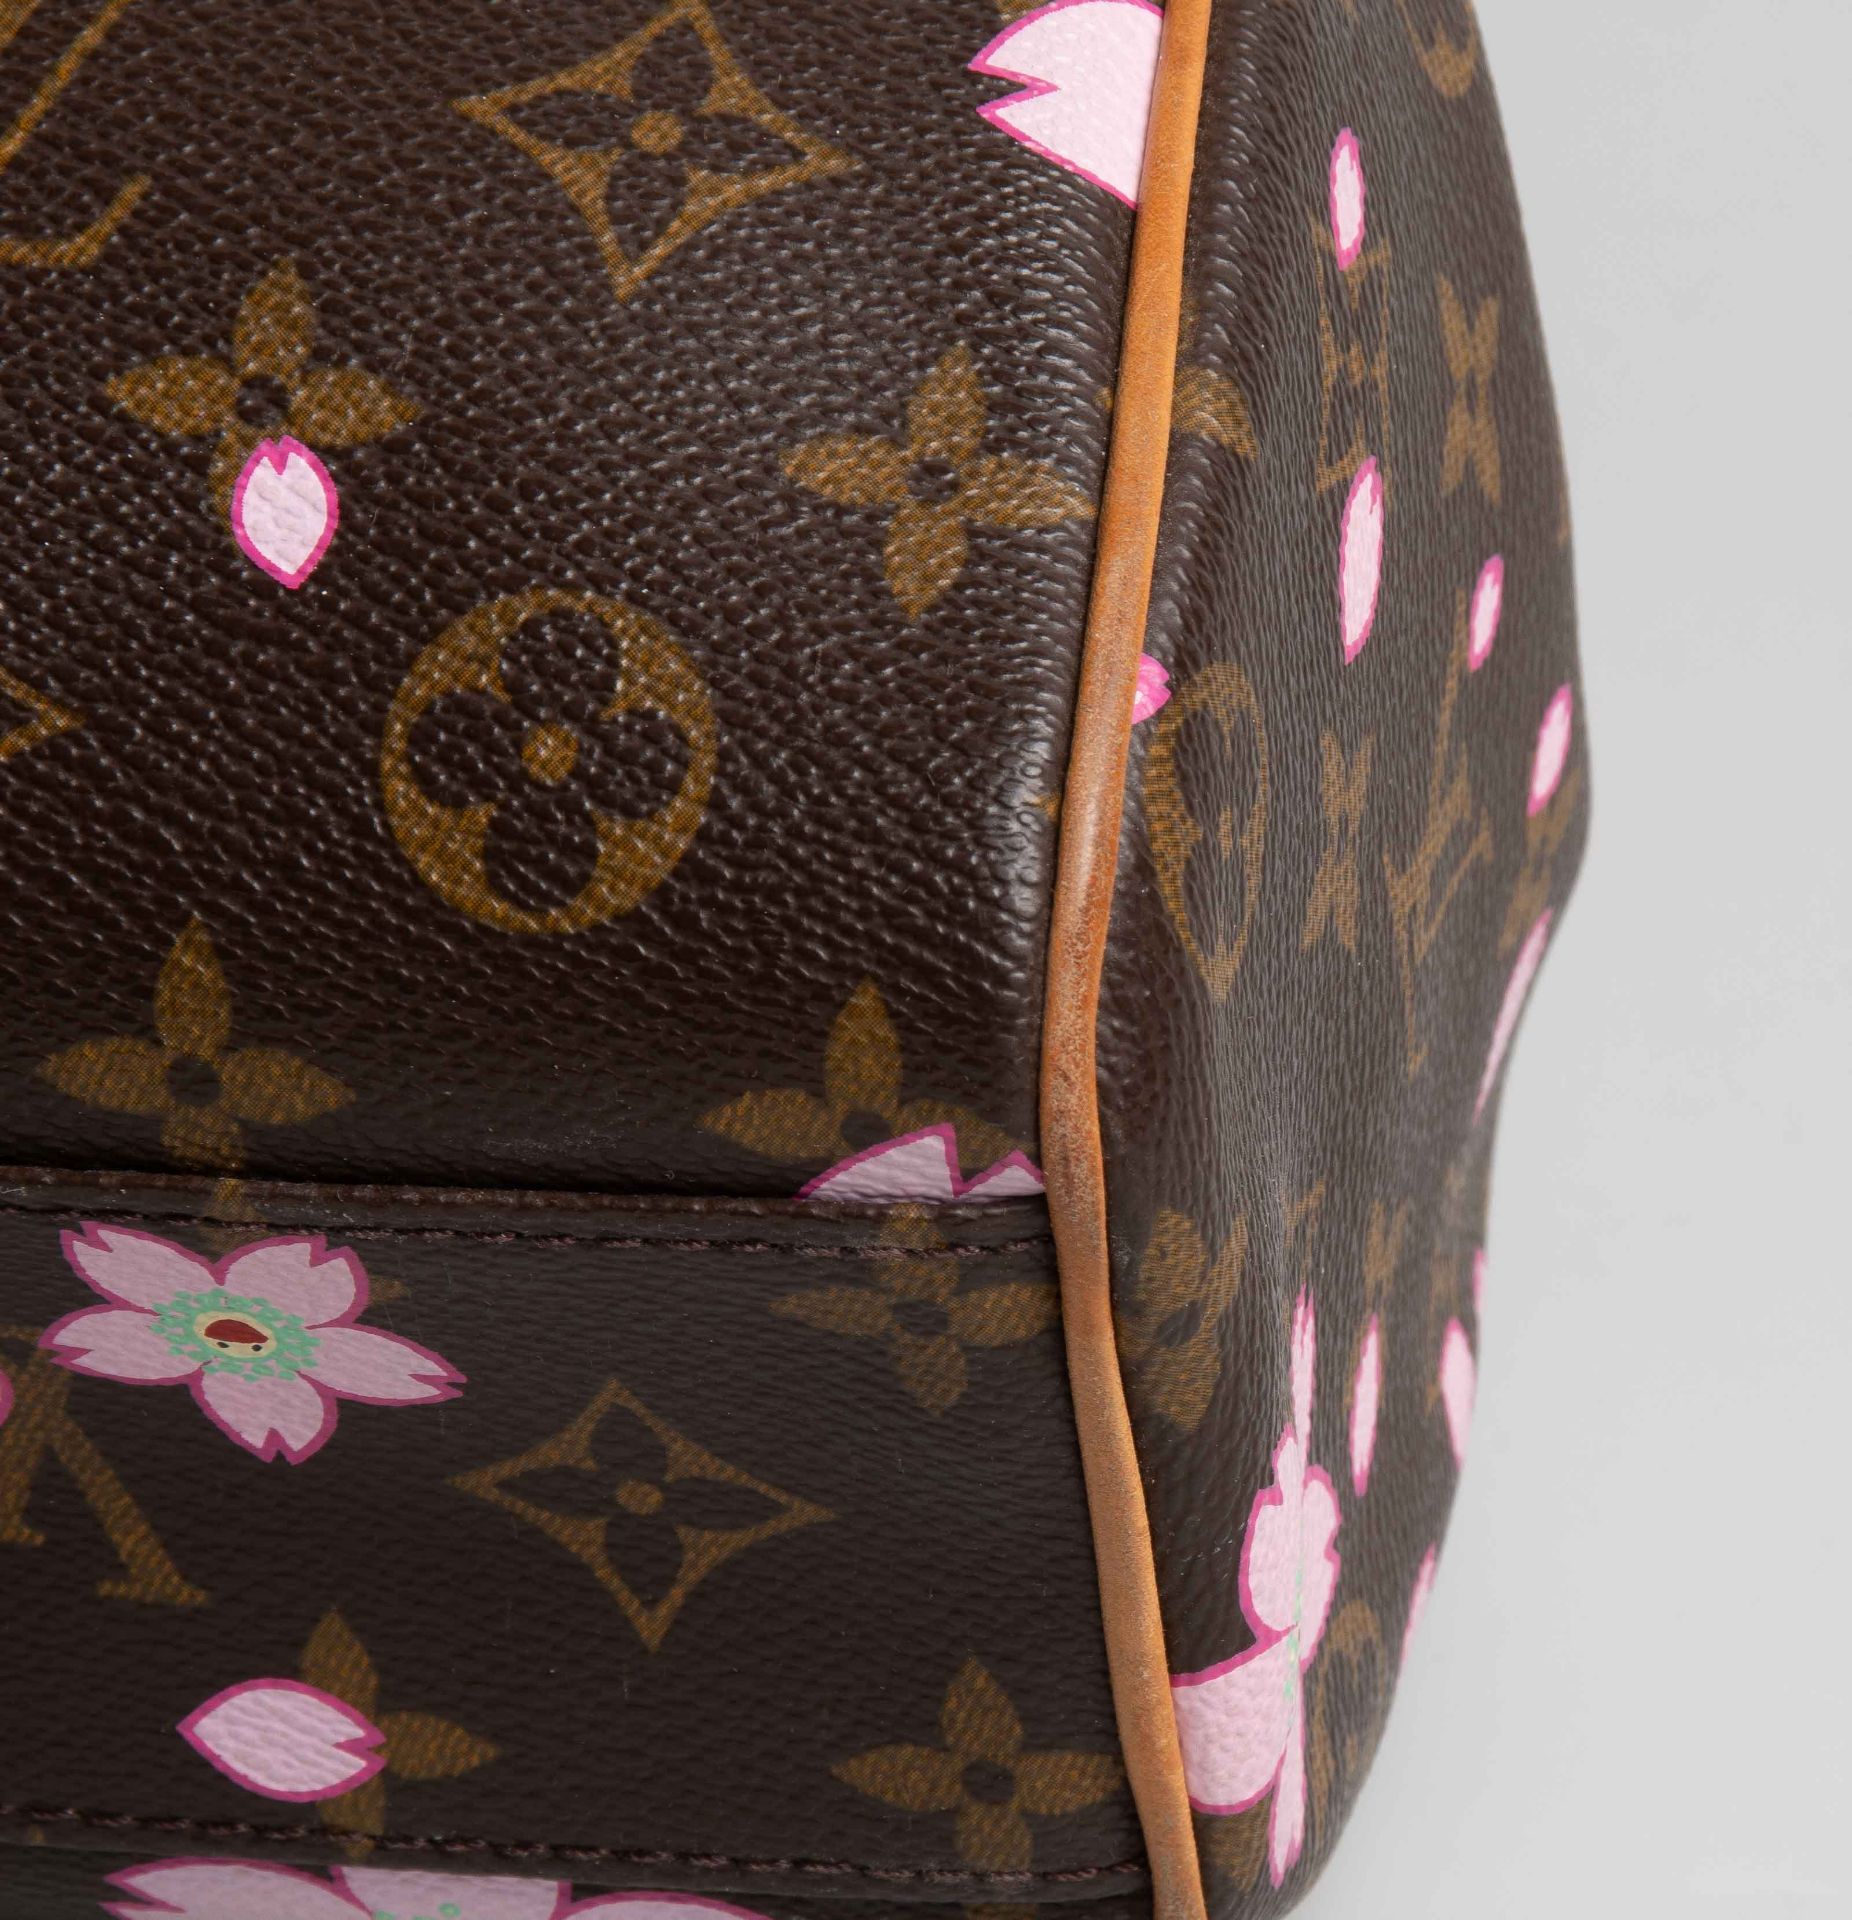 Louis Vuitton, Handtasche "Monogram Cherry Blossom Sac Retro" - Image 12 of 20